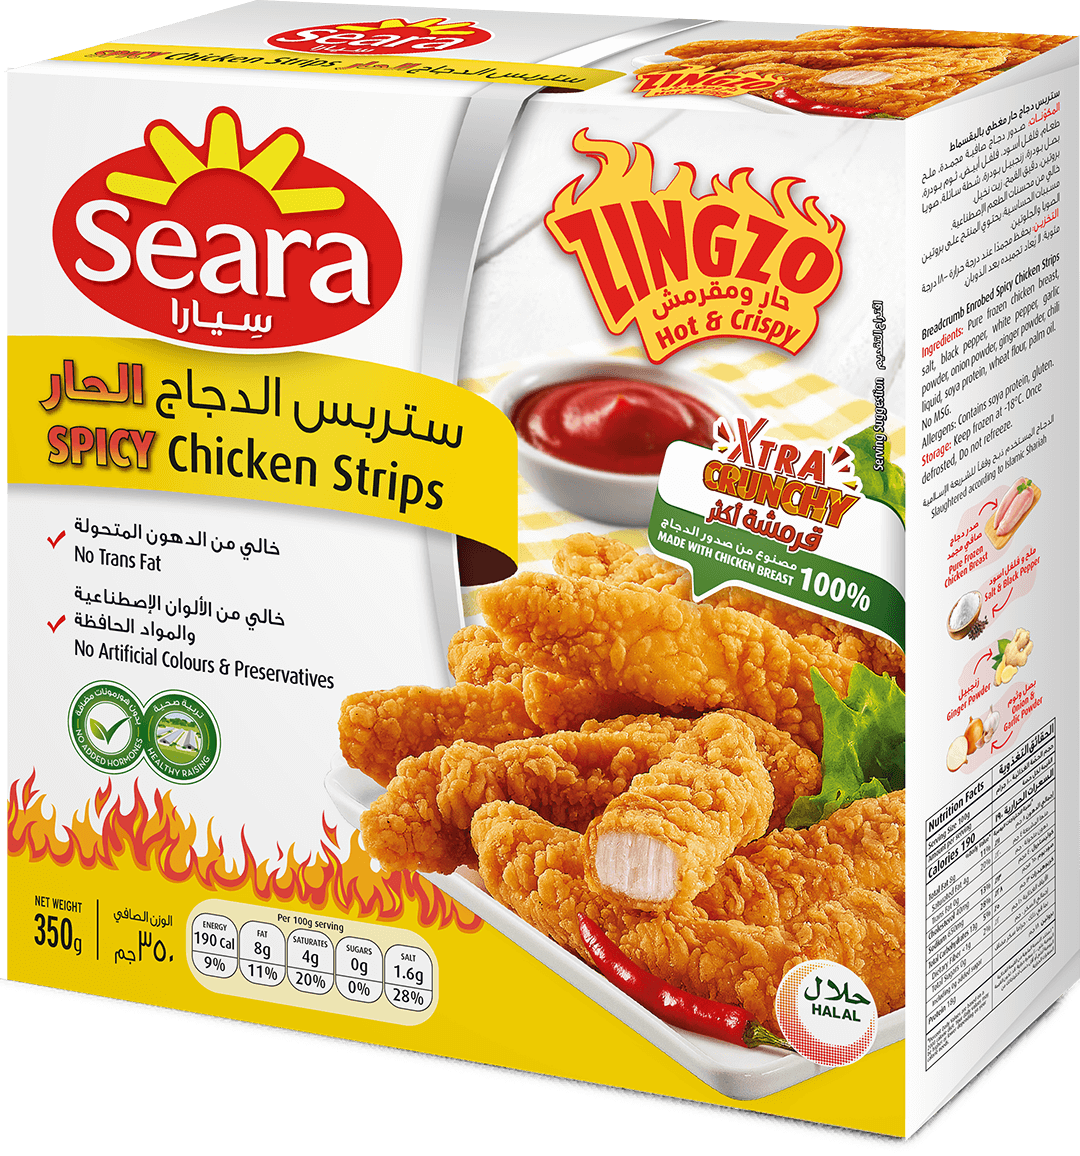 Seara Spicy Chicken Strips (Zingzo) 350G